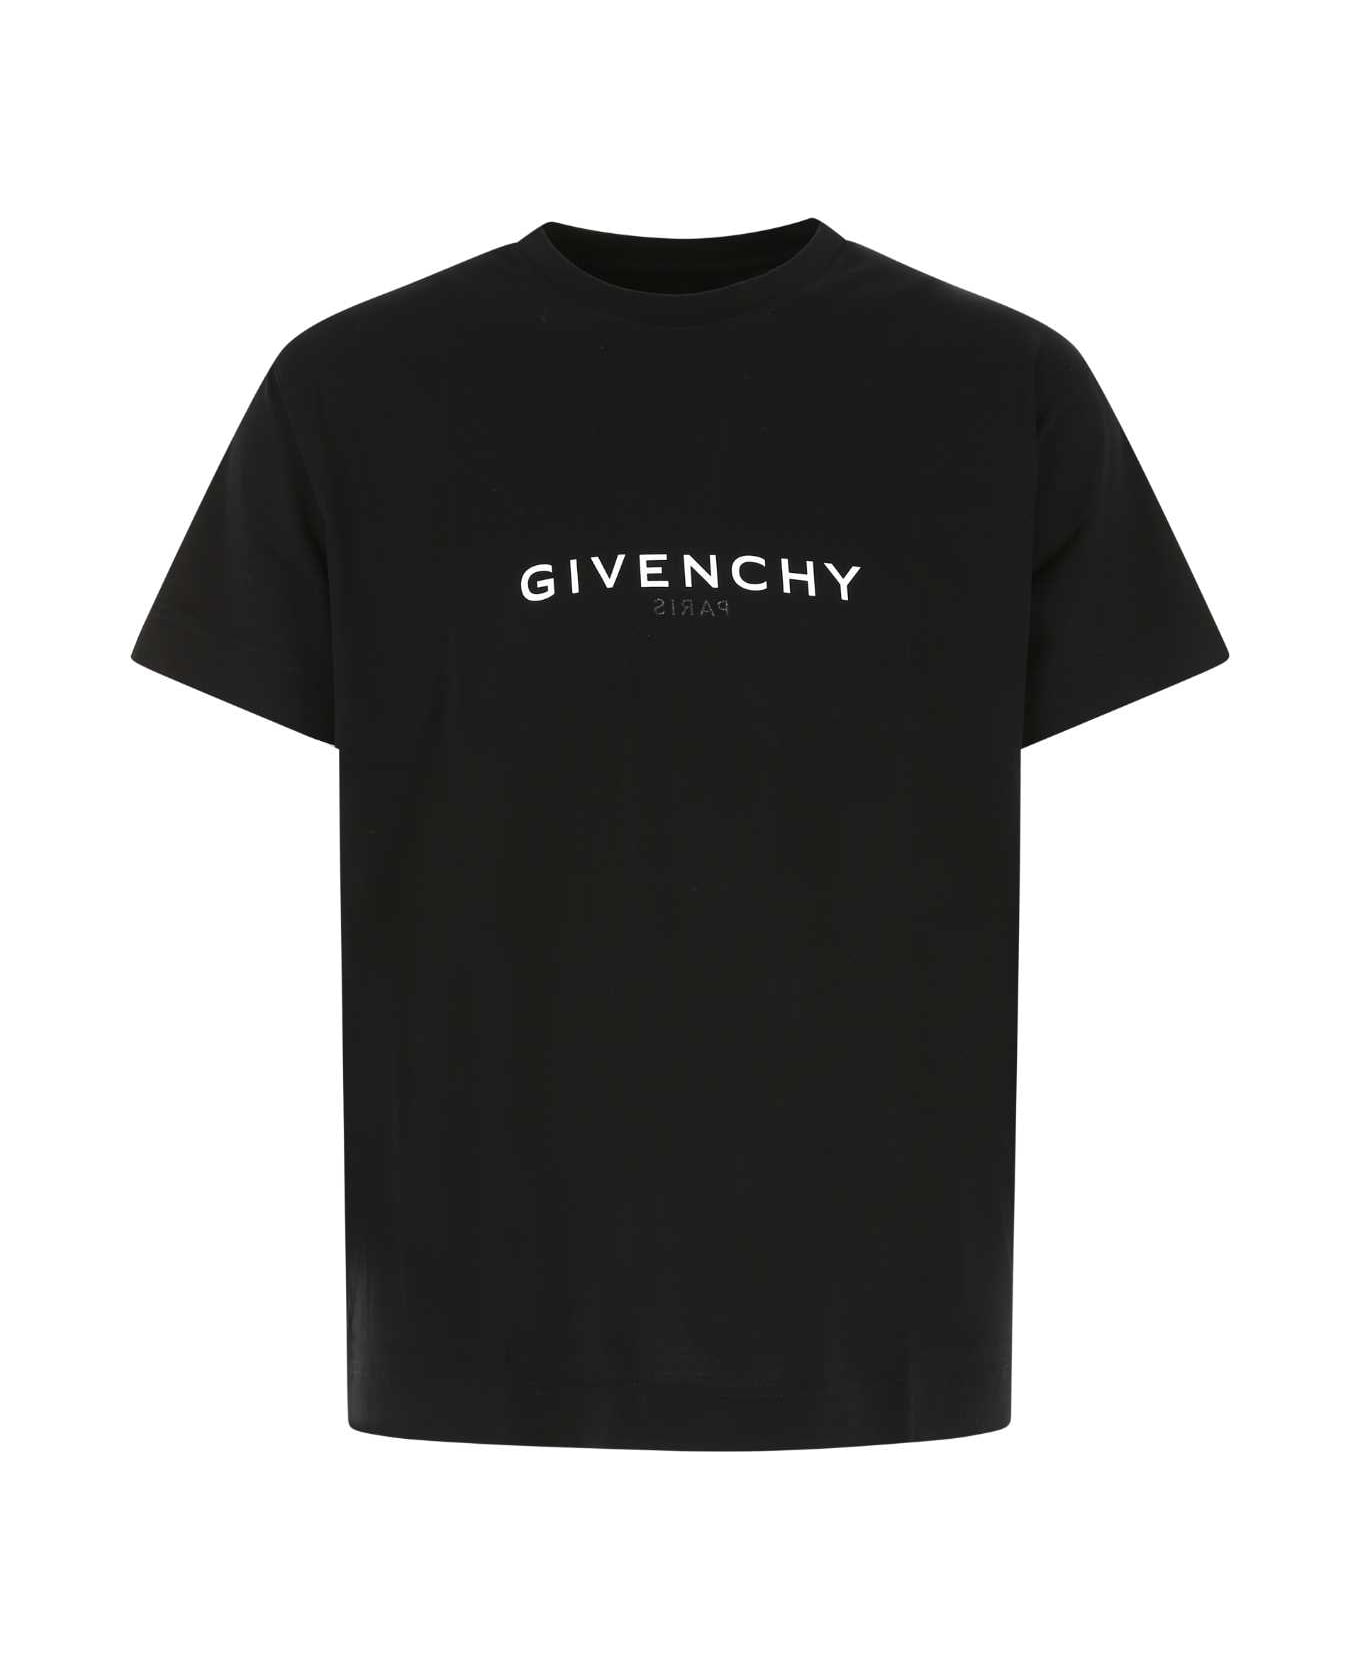 Givenchy Black Cotton Oversize T-shirt - 001